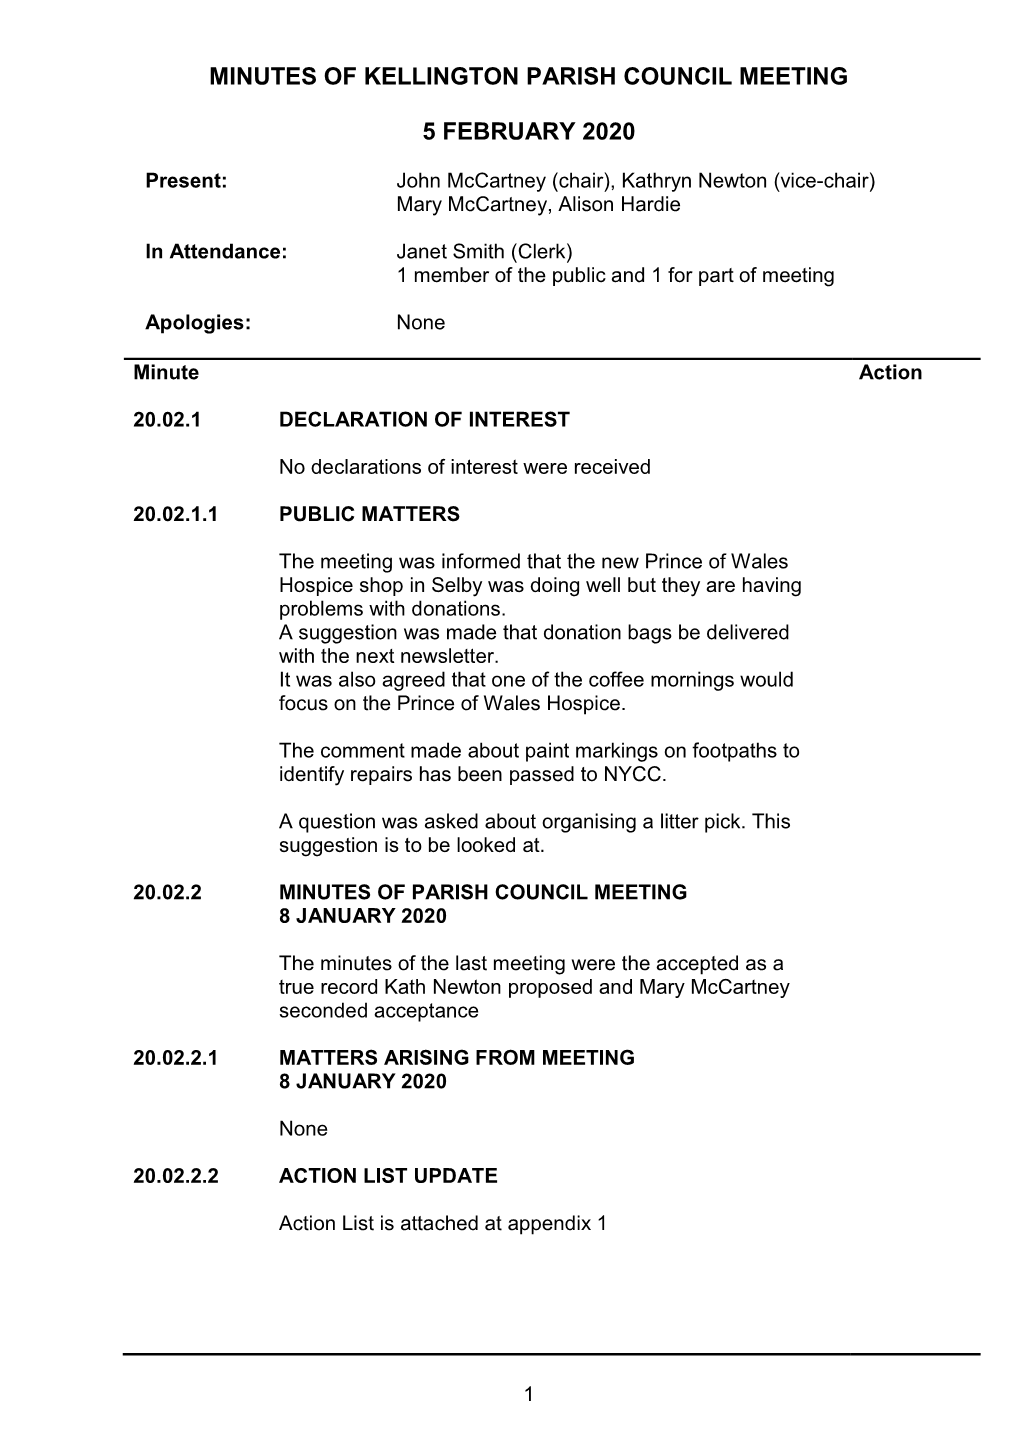 Minutes of Kellington Parish Council Meeting 5 February